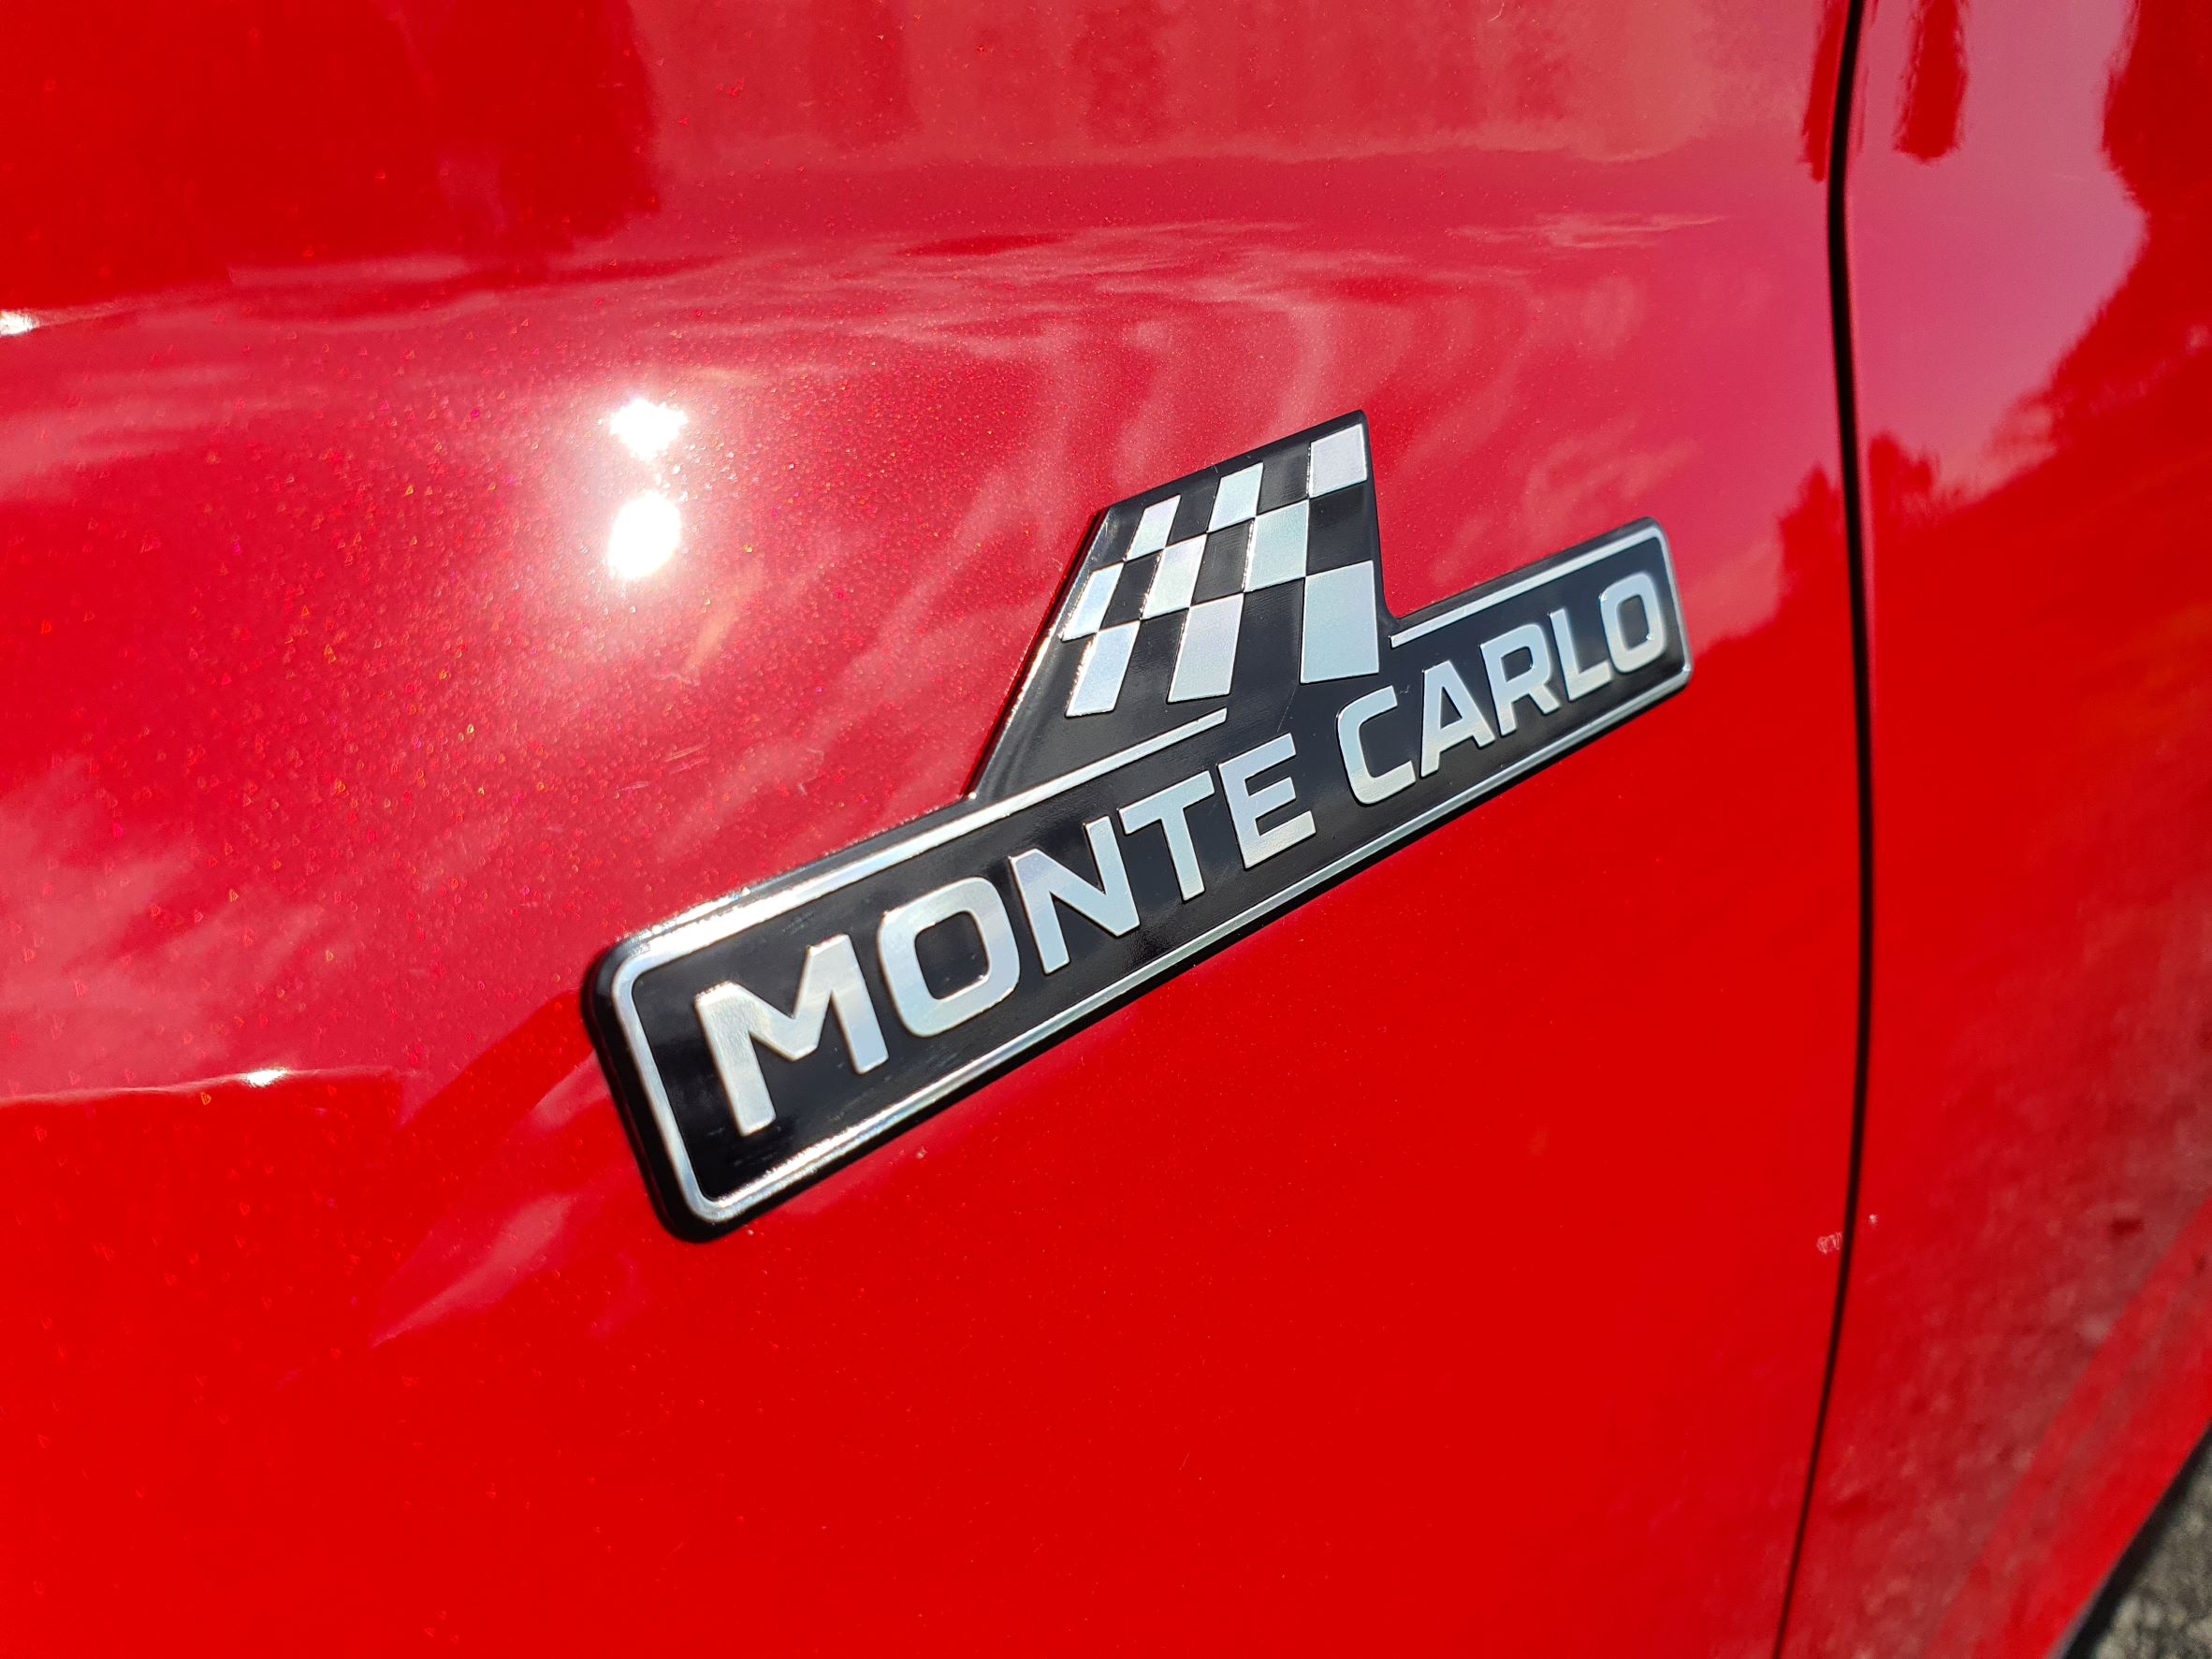 Montecarlo badge on the 2022 Skoda Fabia Montecarlo in red